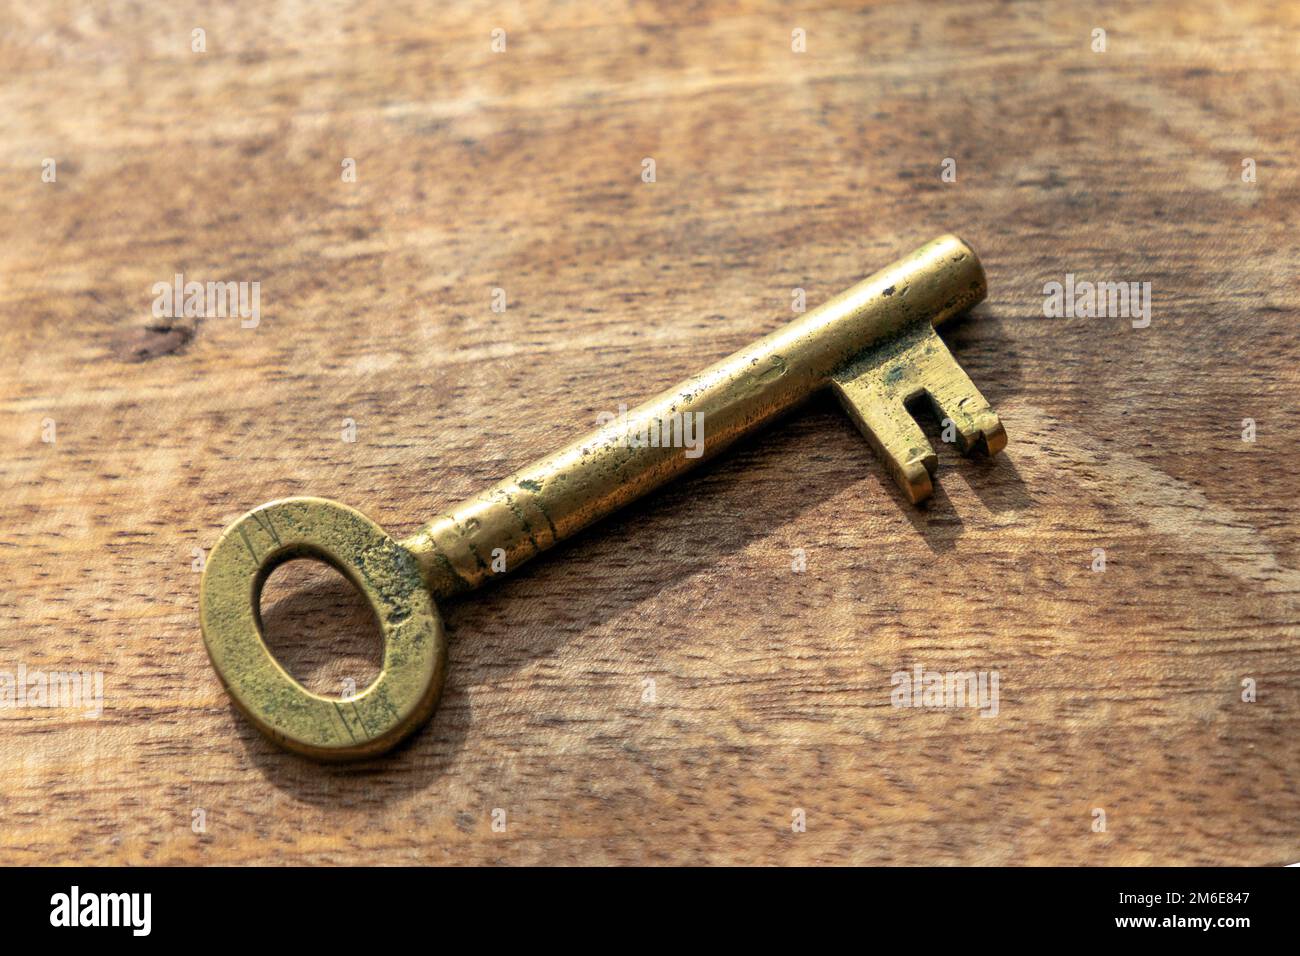 Historic Houseparts, Inc. > Antique Lock Parts > Unbranded Antique Skeleton  or Bit Keys for Antique Locks